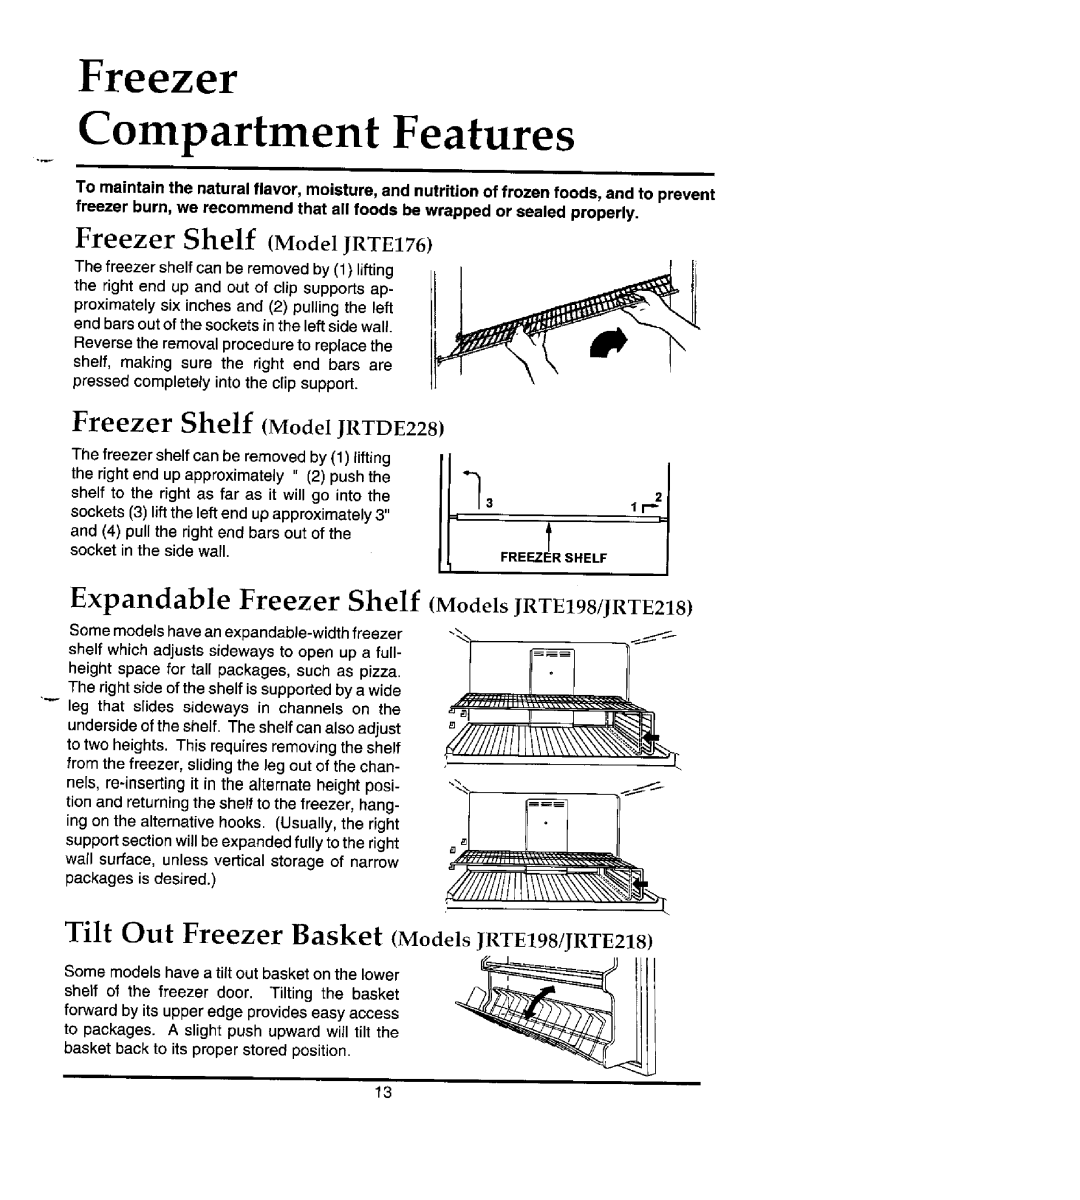 Jenn-Air manual Freezer Shelf ModelJRTE176, Freezer Shelf Model JRTDE228, Expandable Freezer Shelf, 1 1I FREEZERSHELF 